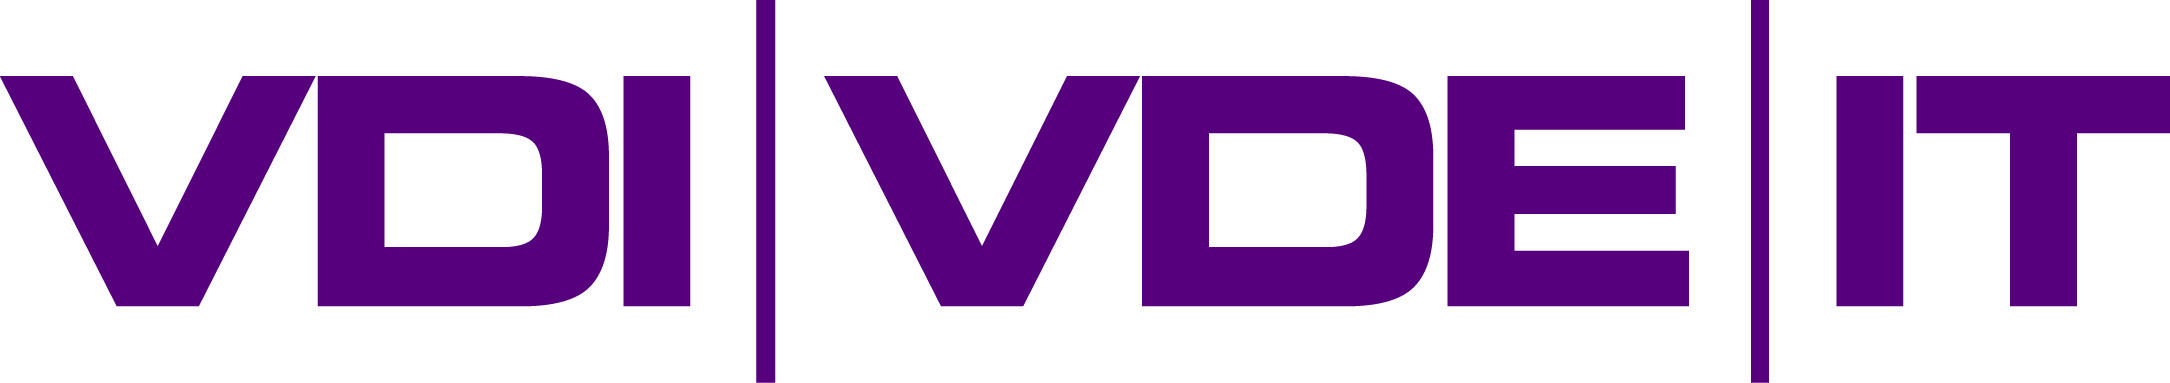 VDIVDE-Logo